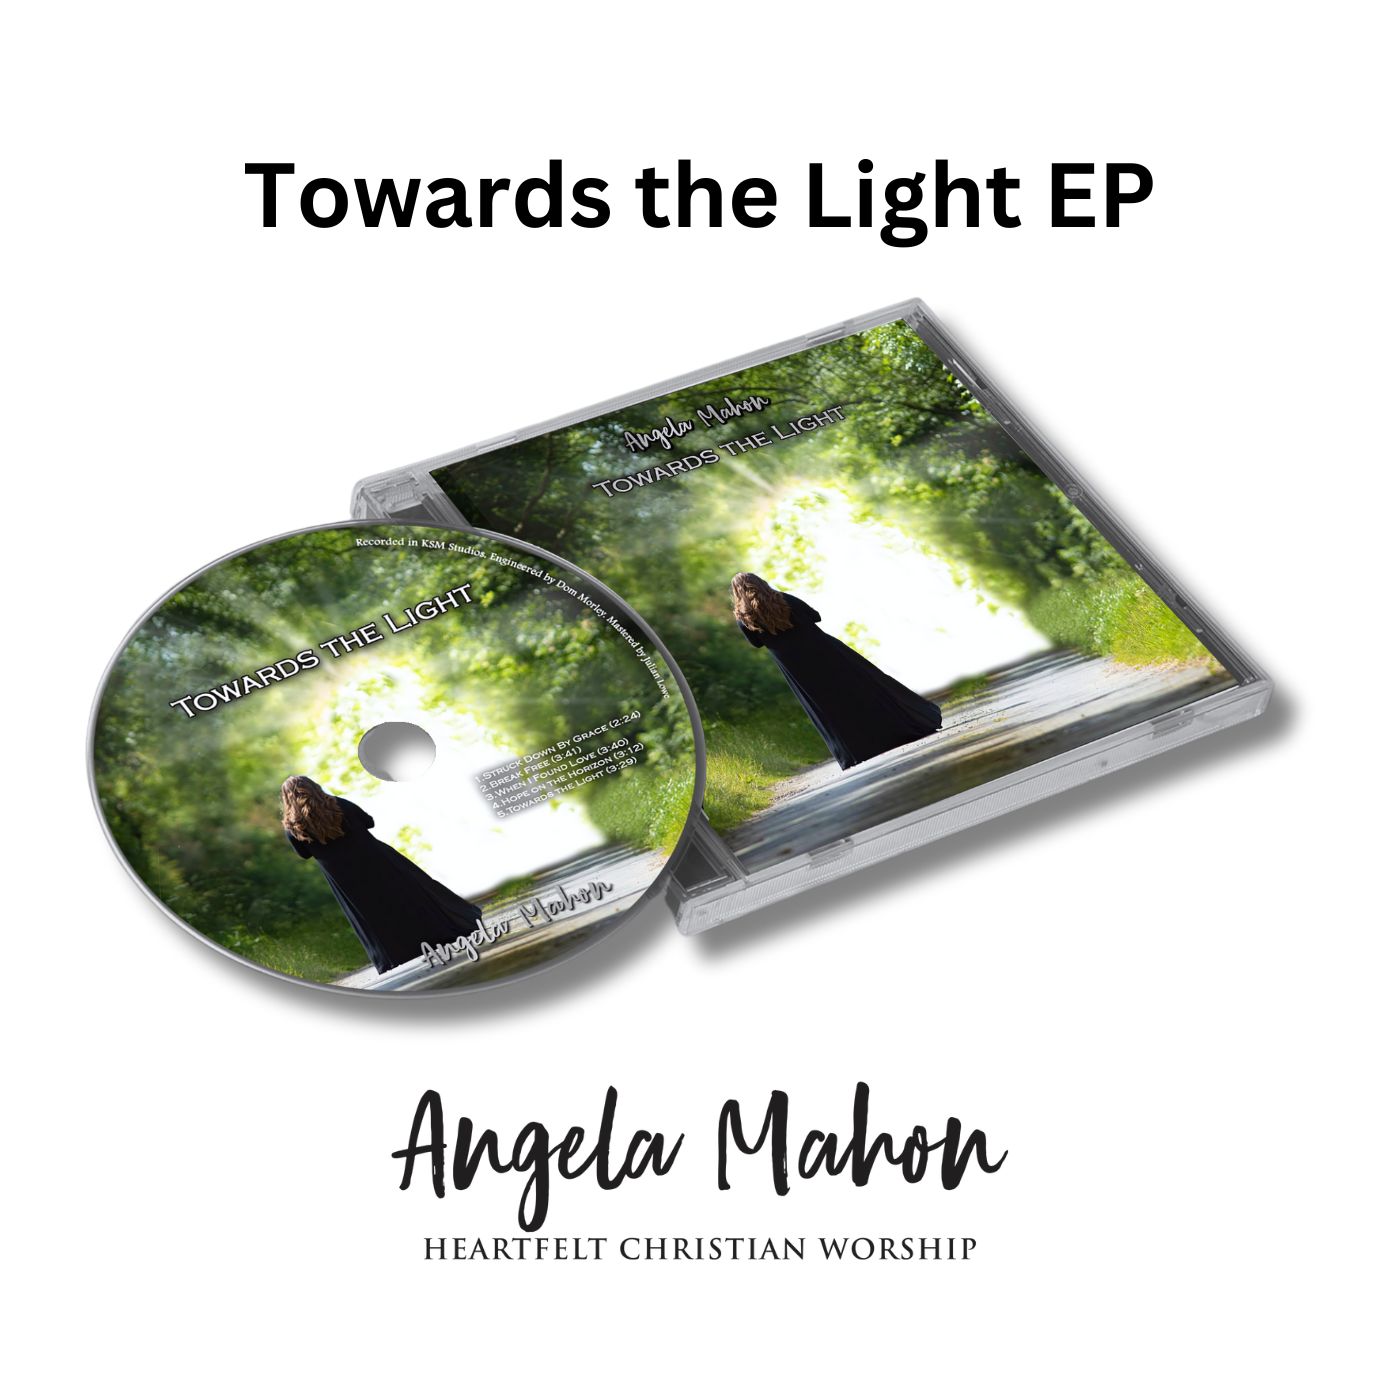 Towards the Light CD